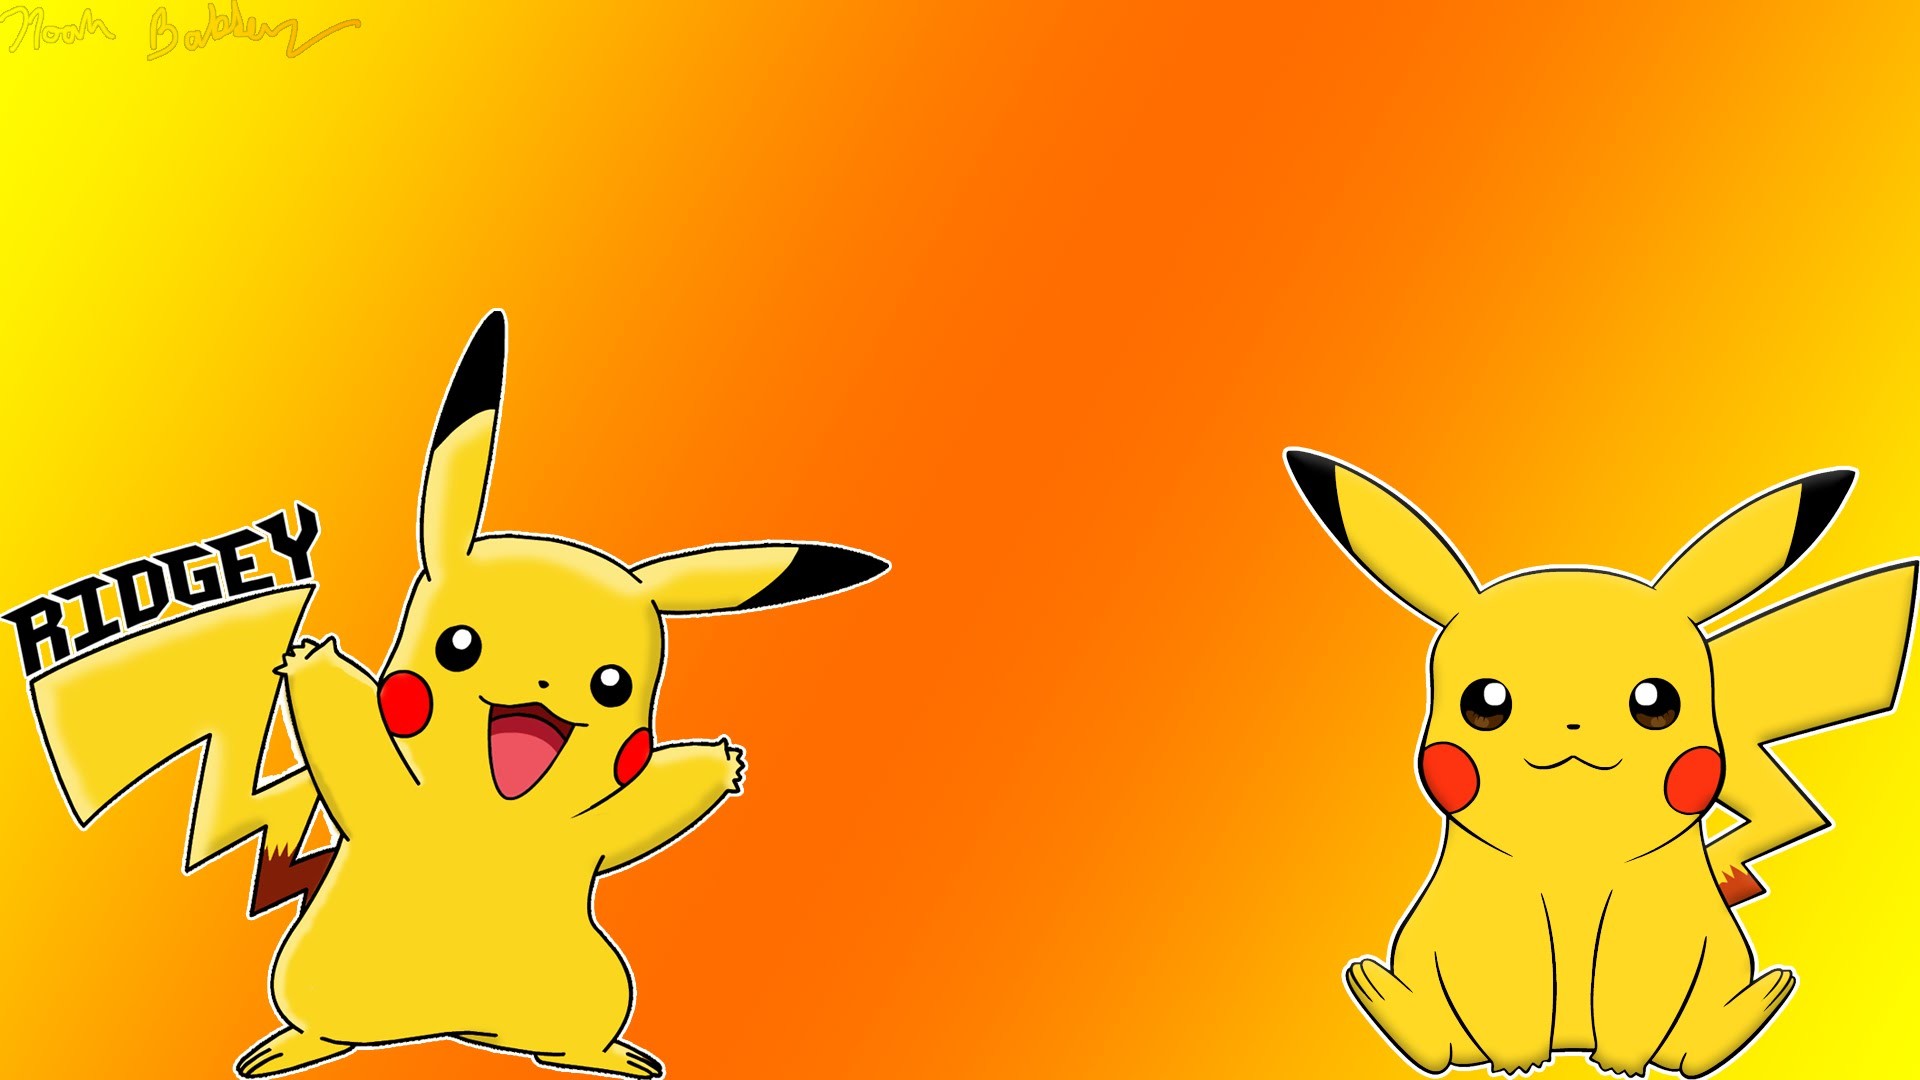 Pikachu wallpaper for Ridgey – Speedart – download link in description – YouTube